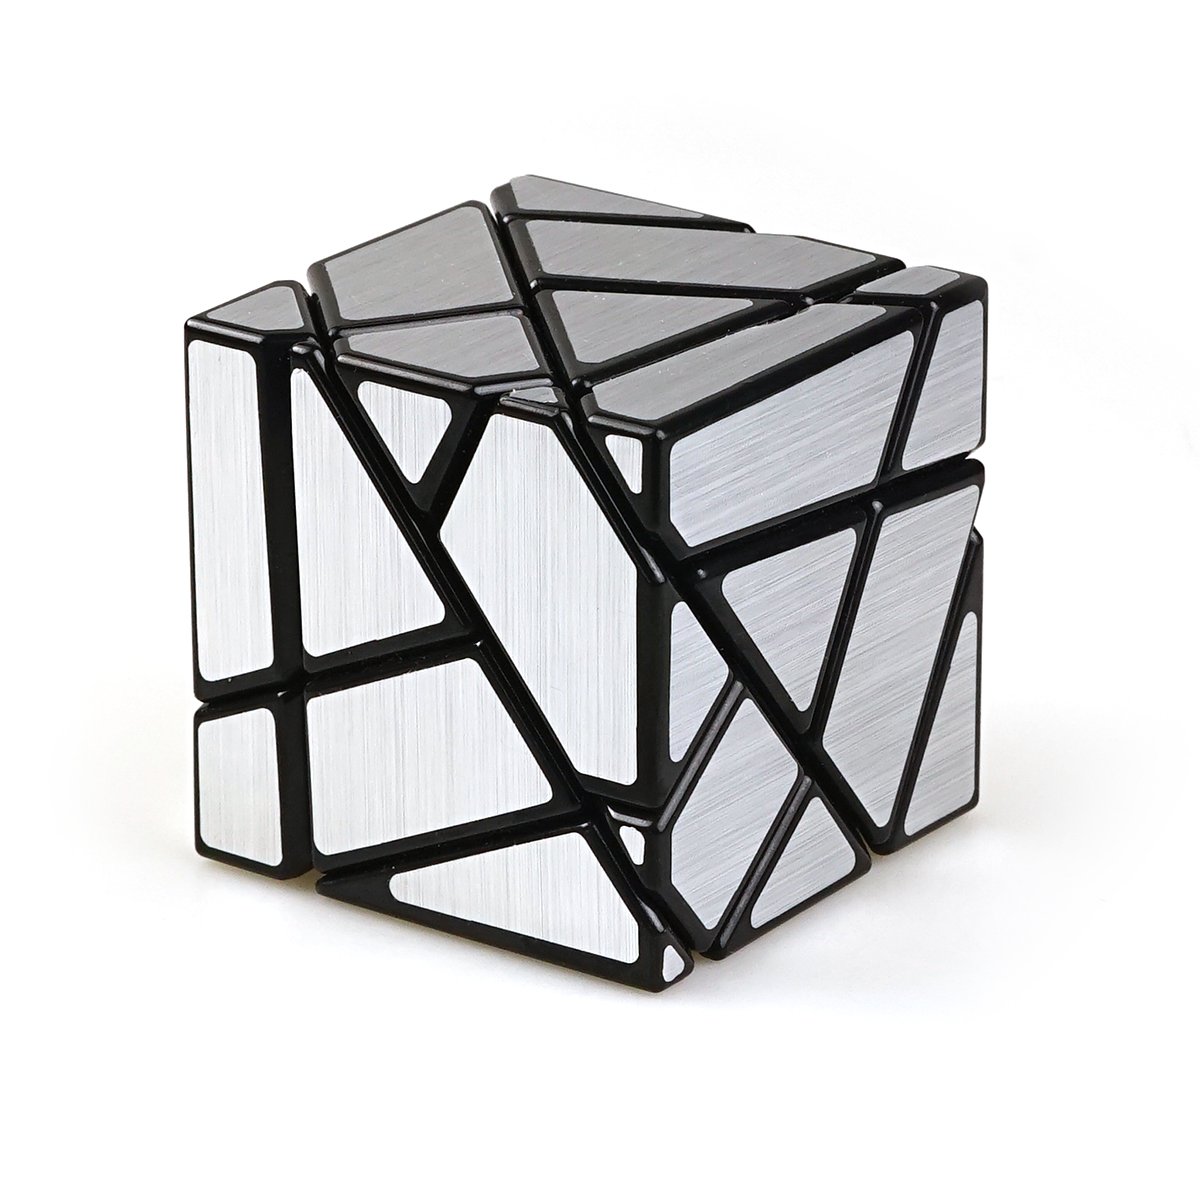 Ghost blocks. Ghost Cube 3x3. Ghost Cube 7x7. Fangcun Ghost 3x3x3 Mirror Blocks. Fangcun Ghost Cube 3x3 Ninja.